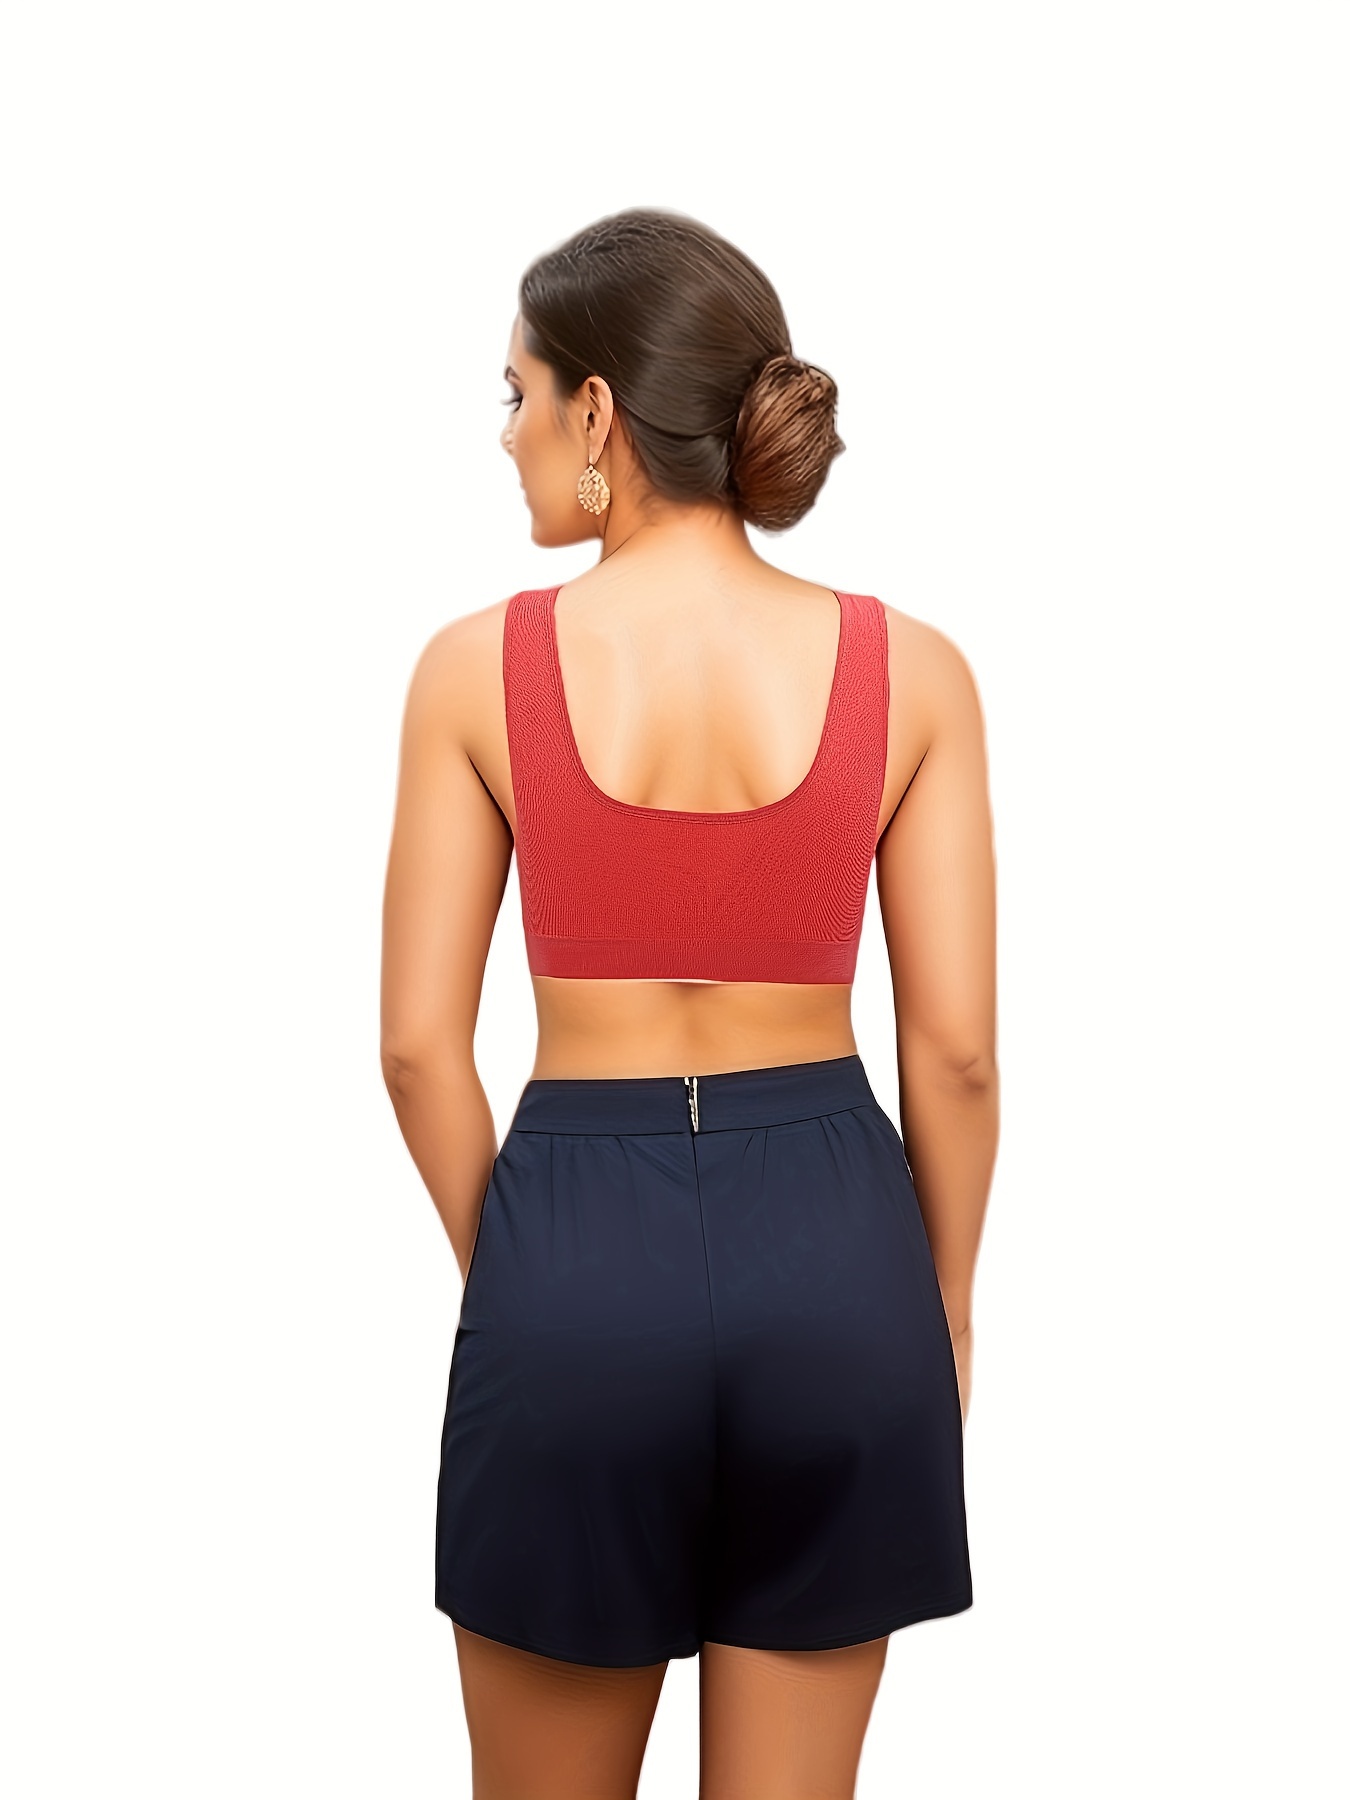 3pcs Solid Wireless Sports Bras Comfy & Breathable Running Workout Tank Bra  Women's Lingerie & Underwear 